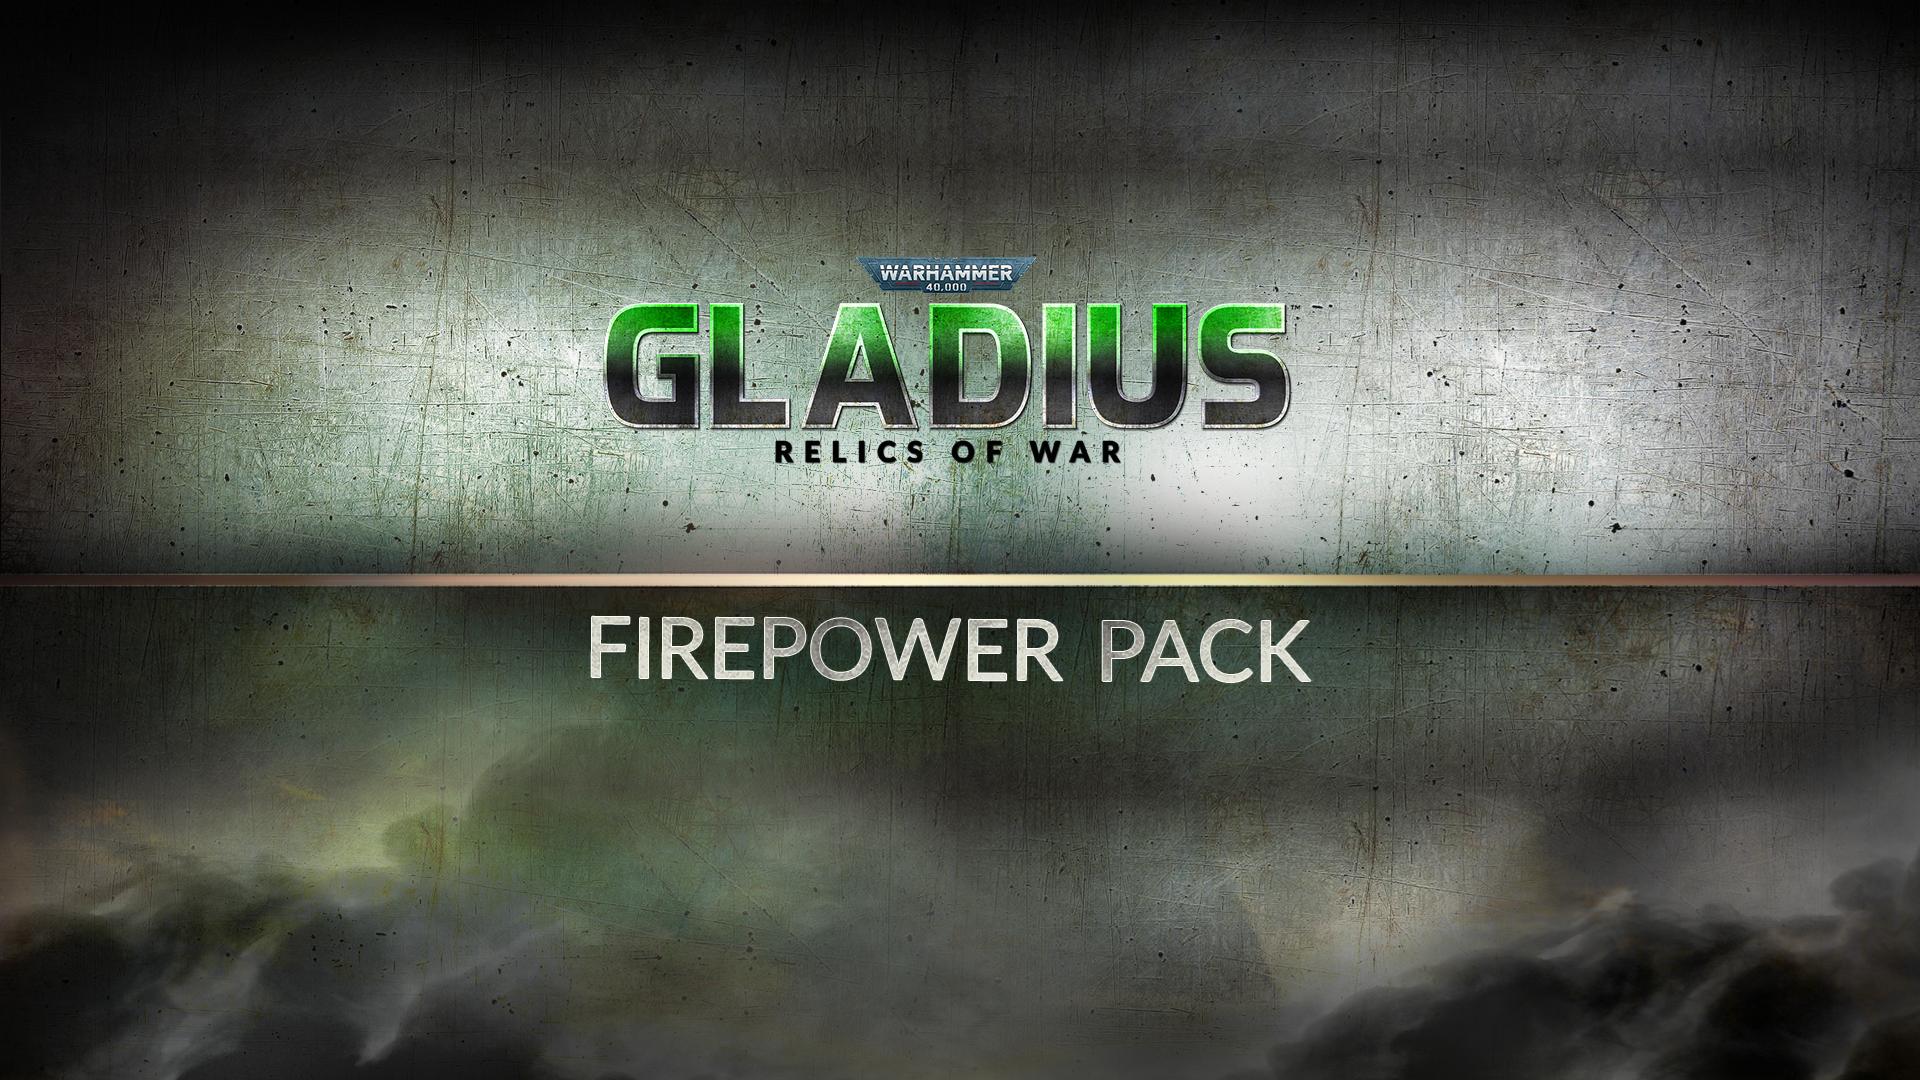 Warhammer 40,000: Gladius – Firepower Pack | ROW (e8207304-82d5-404f-8fe4-6bbe5ad2e9a6)